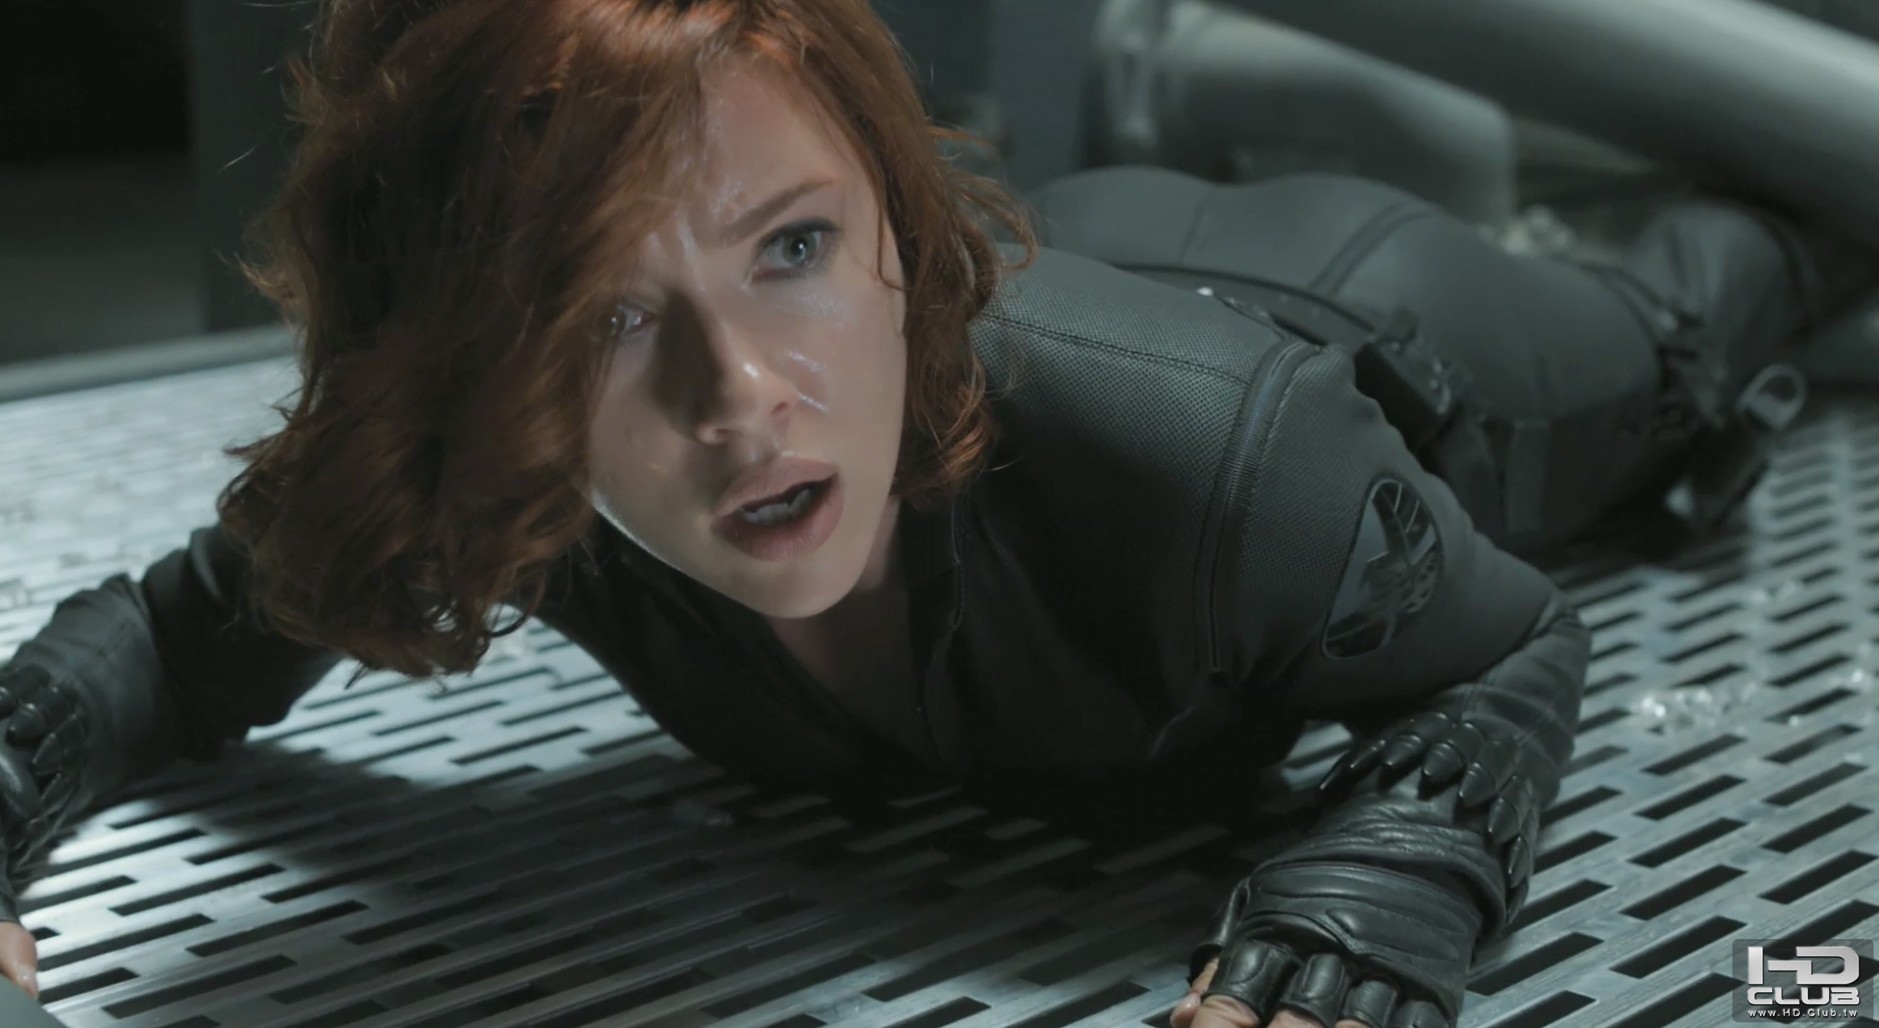 Scarlett-Johansson-The-Avengers-Black-Widow.jpg